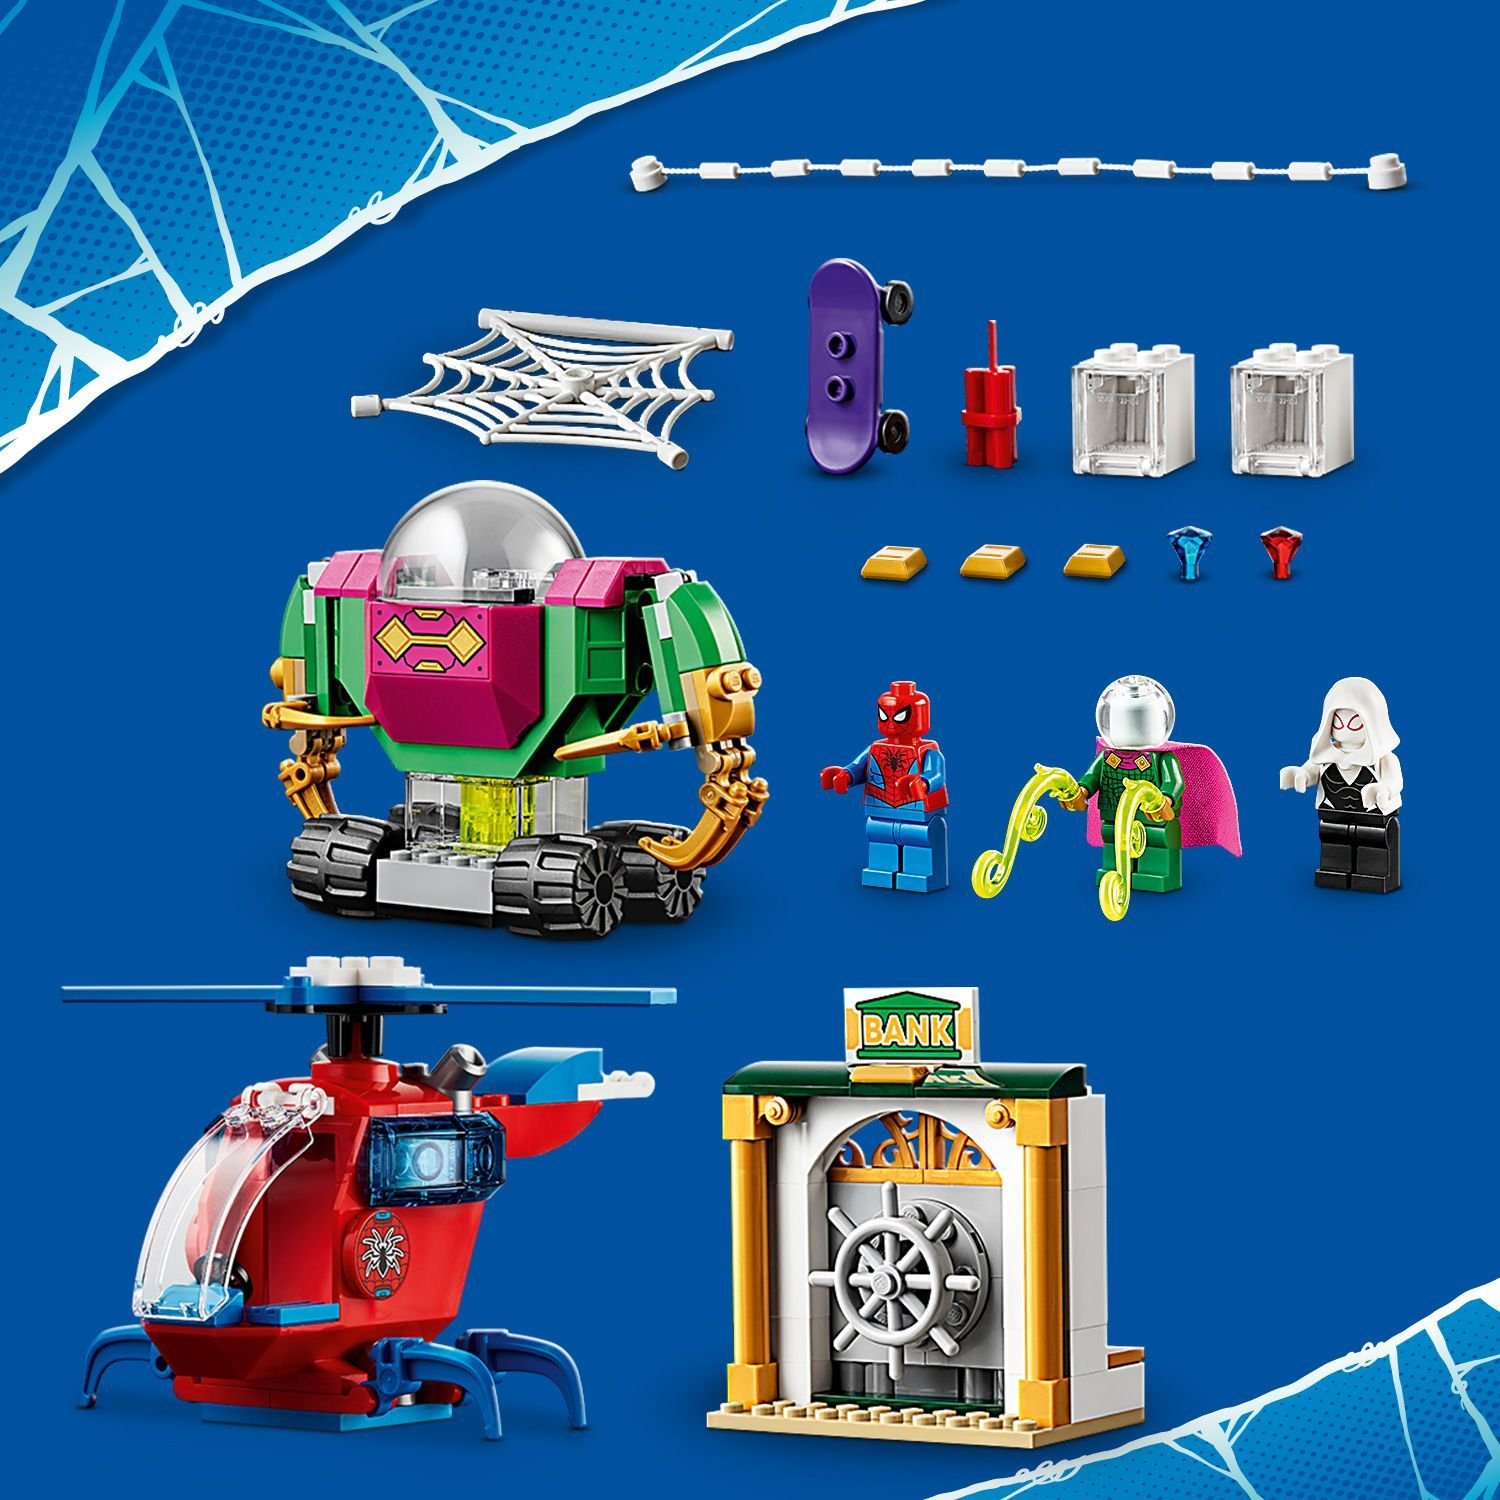 Конструктор LEGO Marvel Super Heroes 76149 Spiderman Угрозы Мистерио